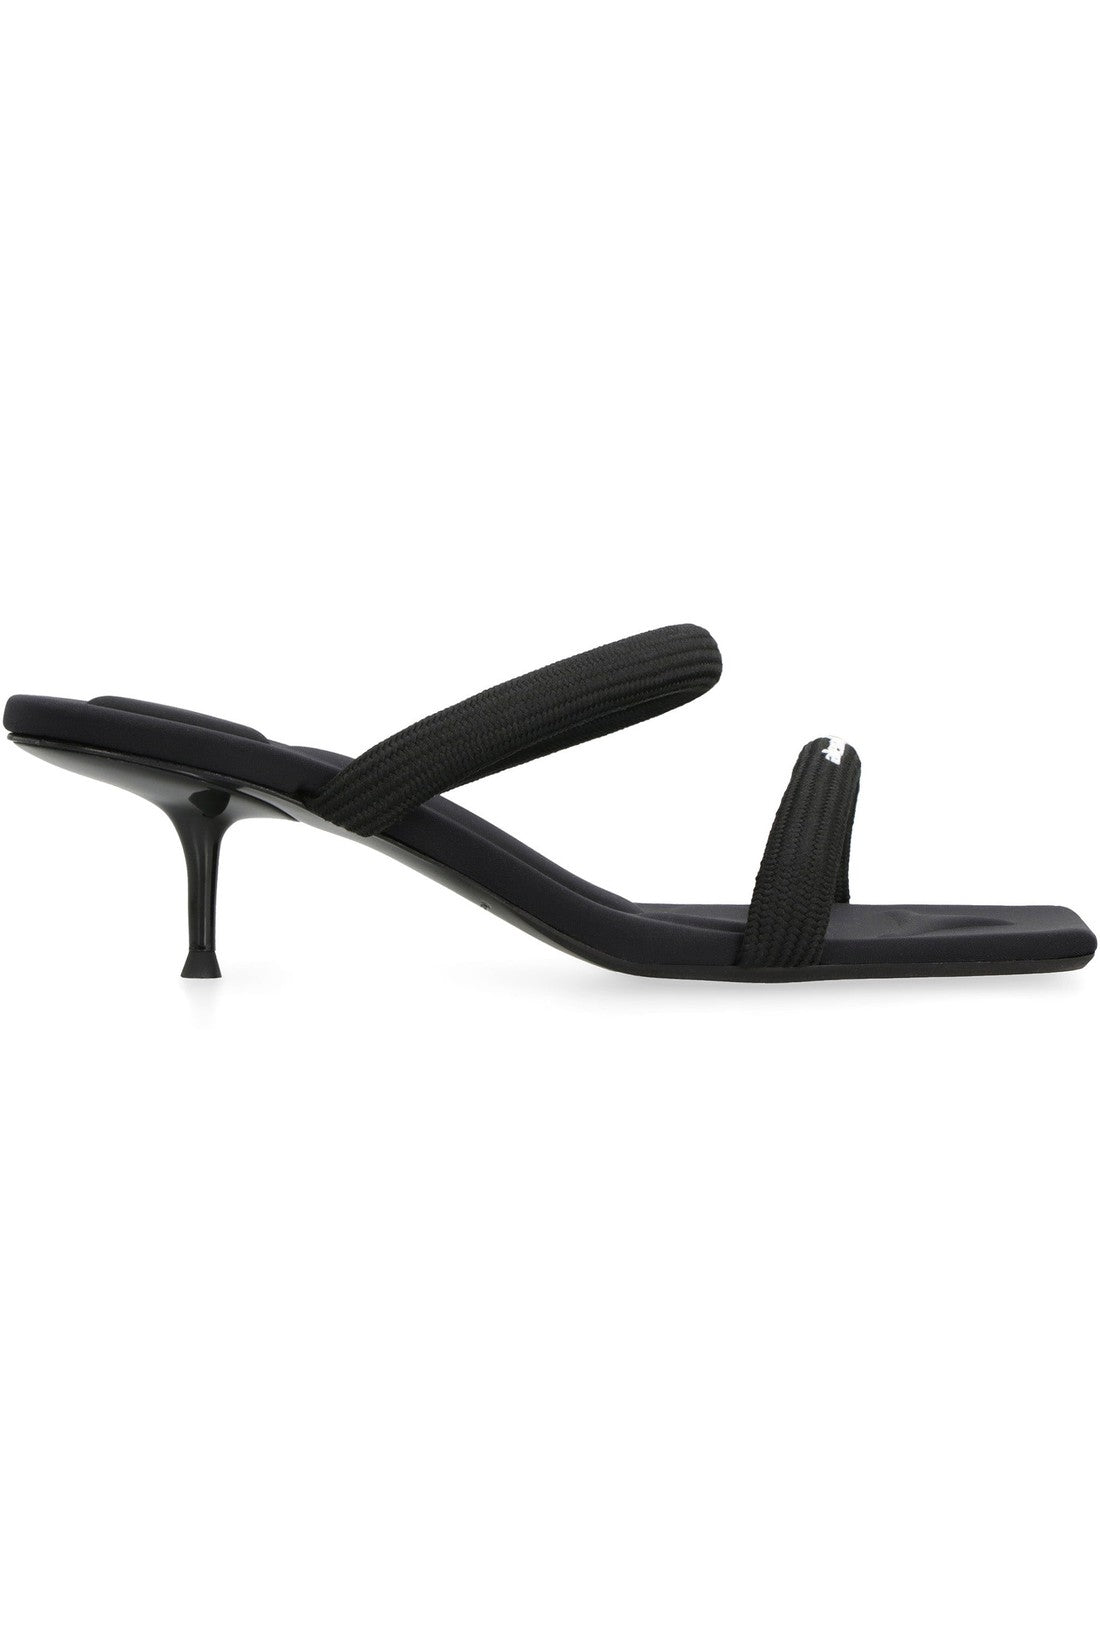 Alexander Wang-OUTLET-SALE-Jessie heeled sandals-ARCHIVIST